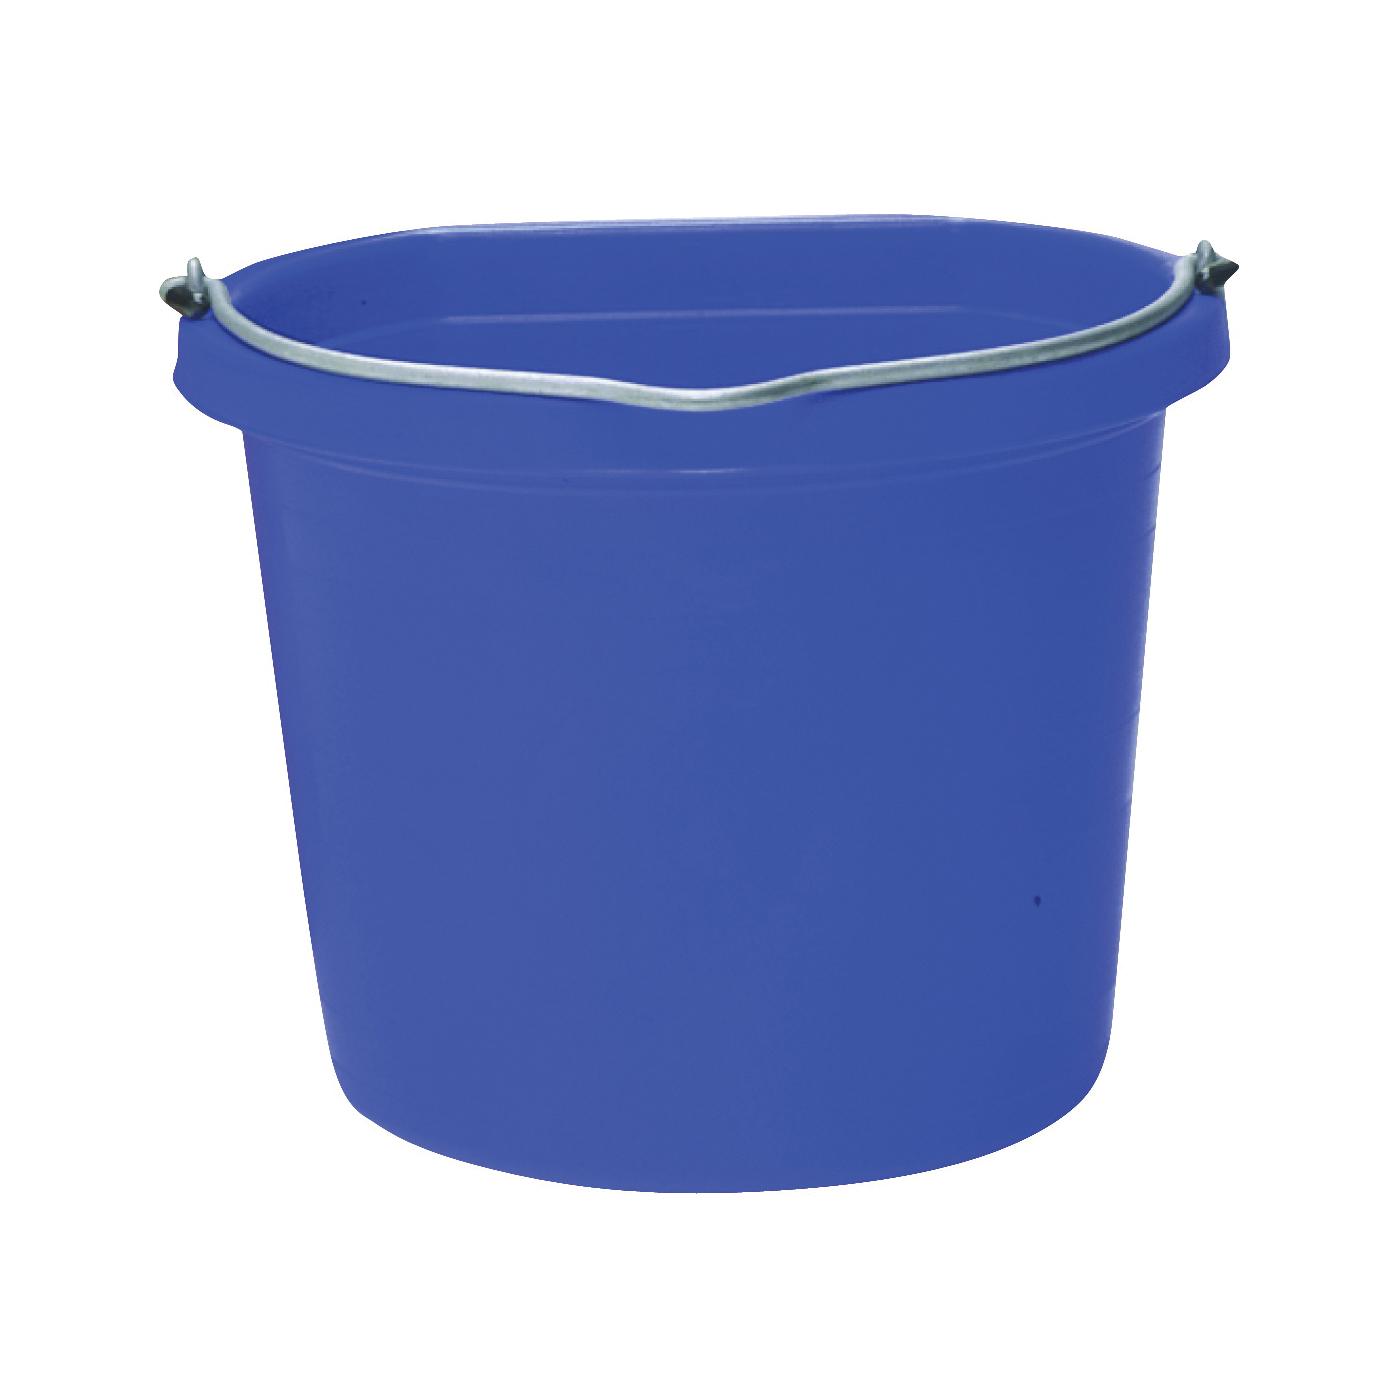 Fortex-Fortiflex 1302040 Bucket, 20 qt Volume, Polyethylene Resin, Blue